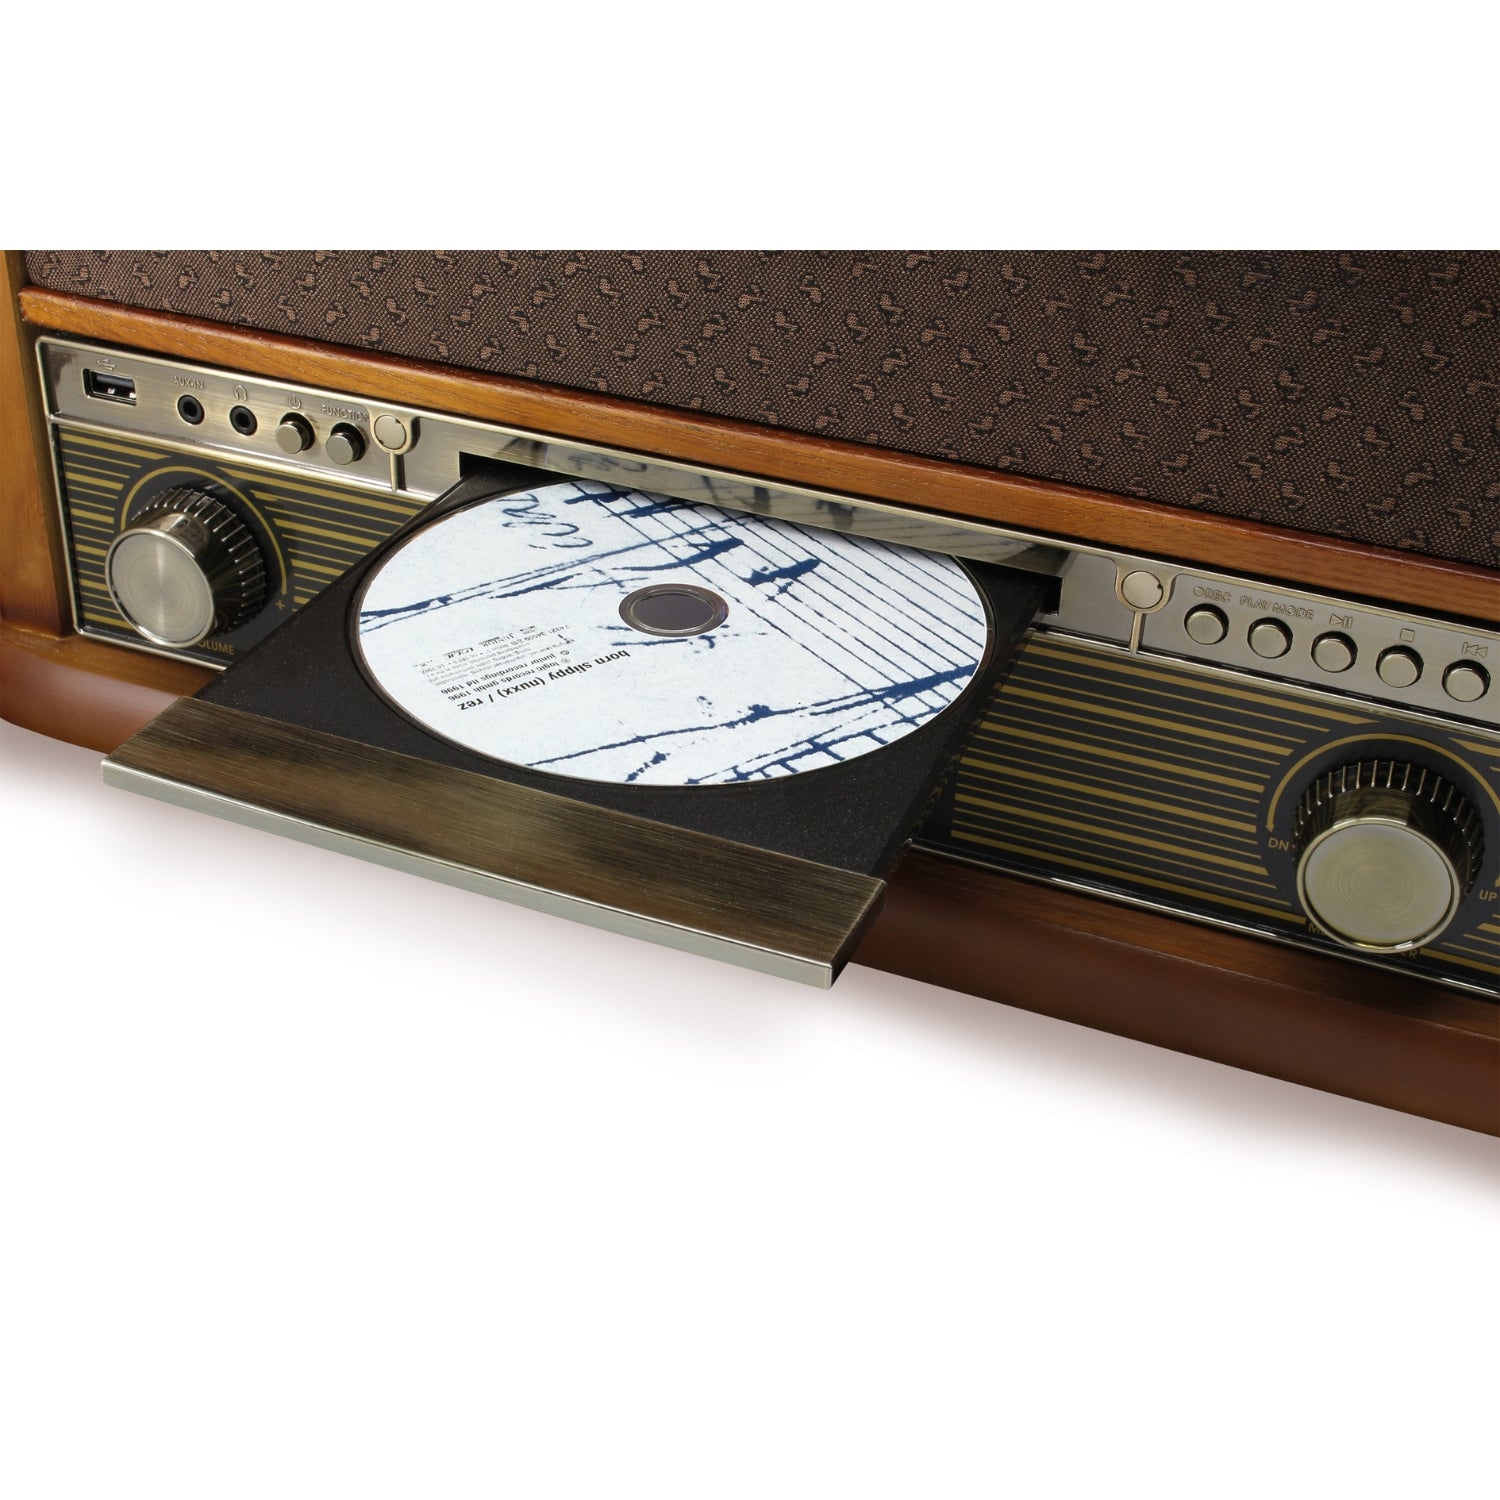 B-WARE Soundmaster NR546BR Nostalgie Stereo DAB+/UKW Digitalradio mit Plattenspieler inkl Audio Technica Magnettonabnehmersystem, CD/MP3, USB, Kassette, Bluetooth und Encoding